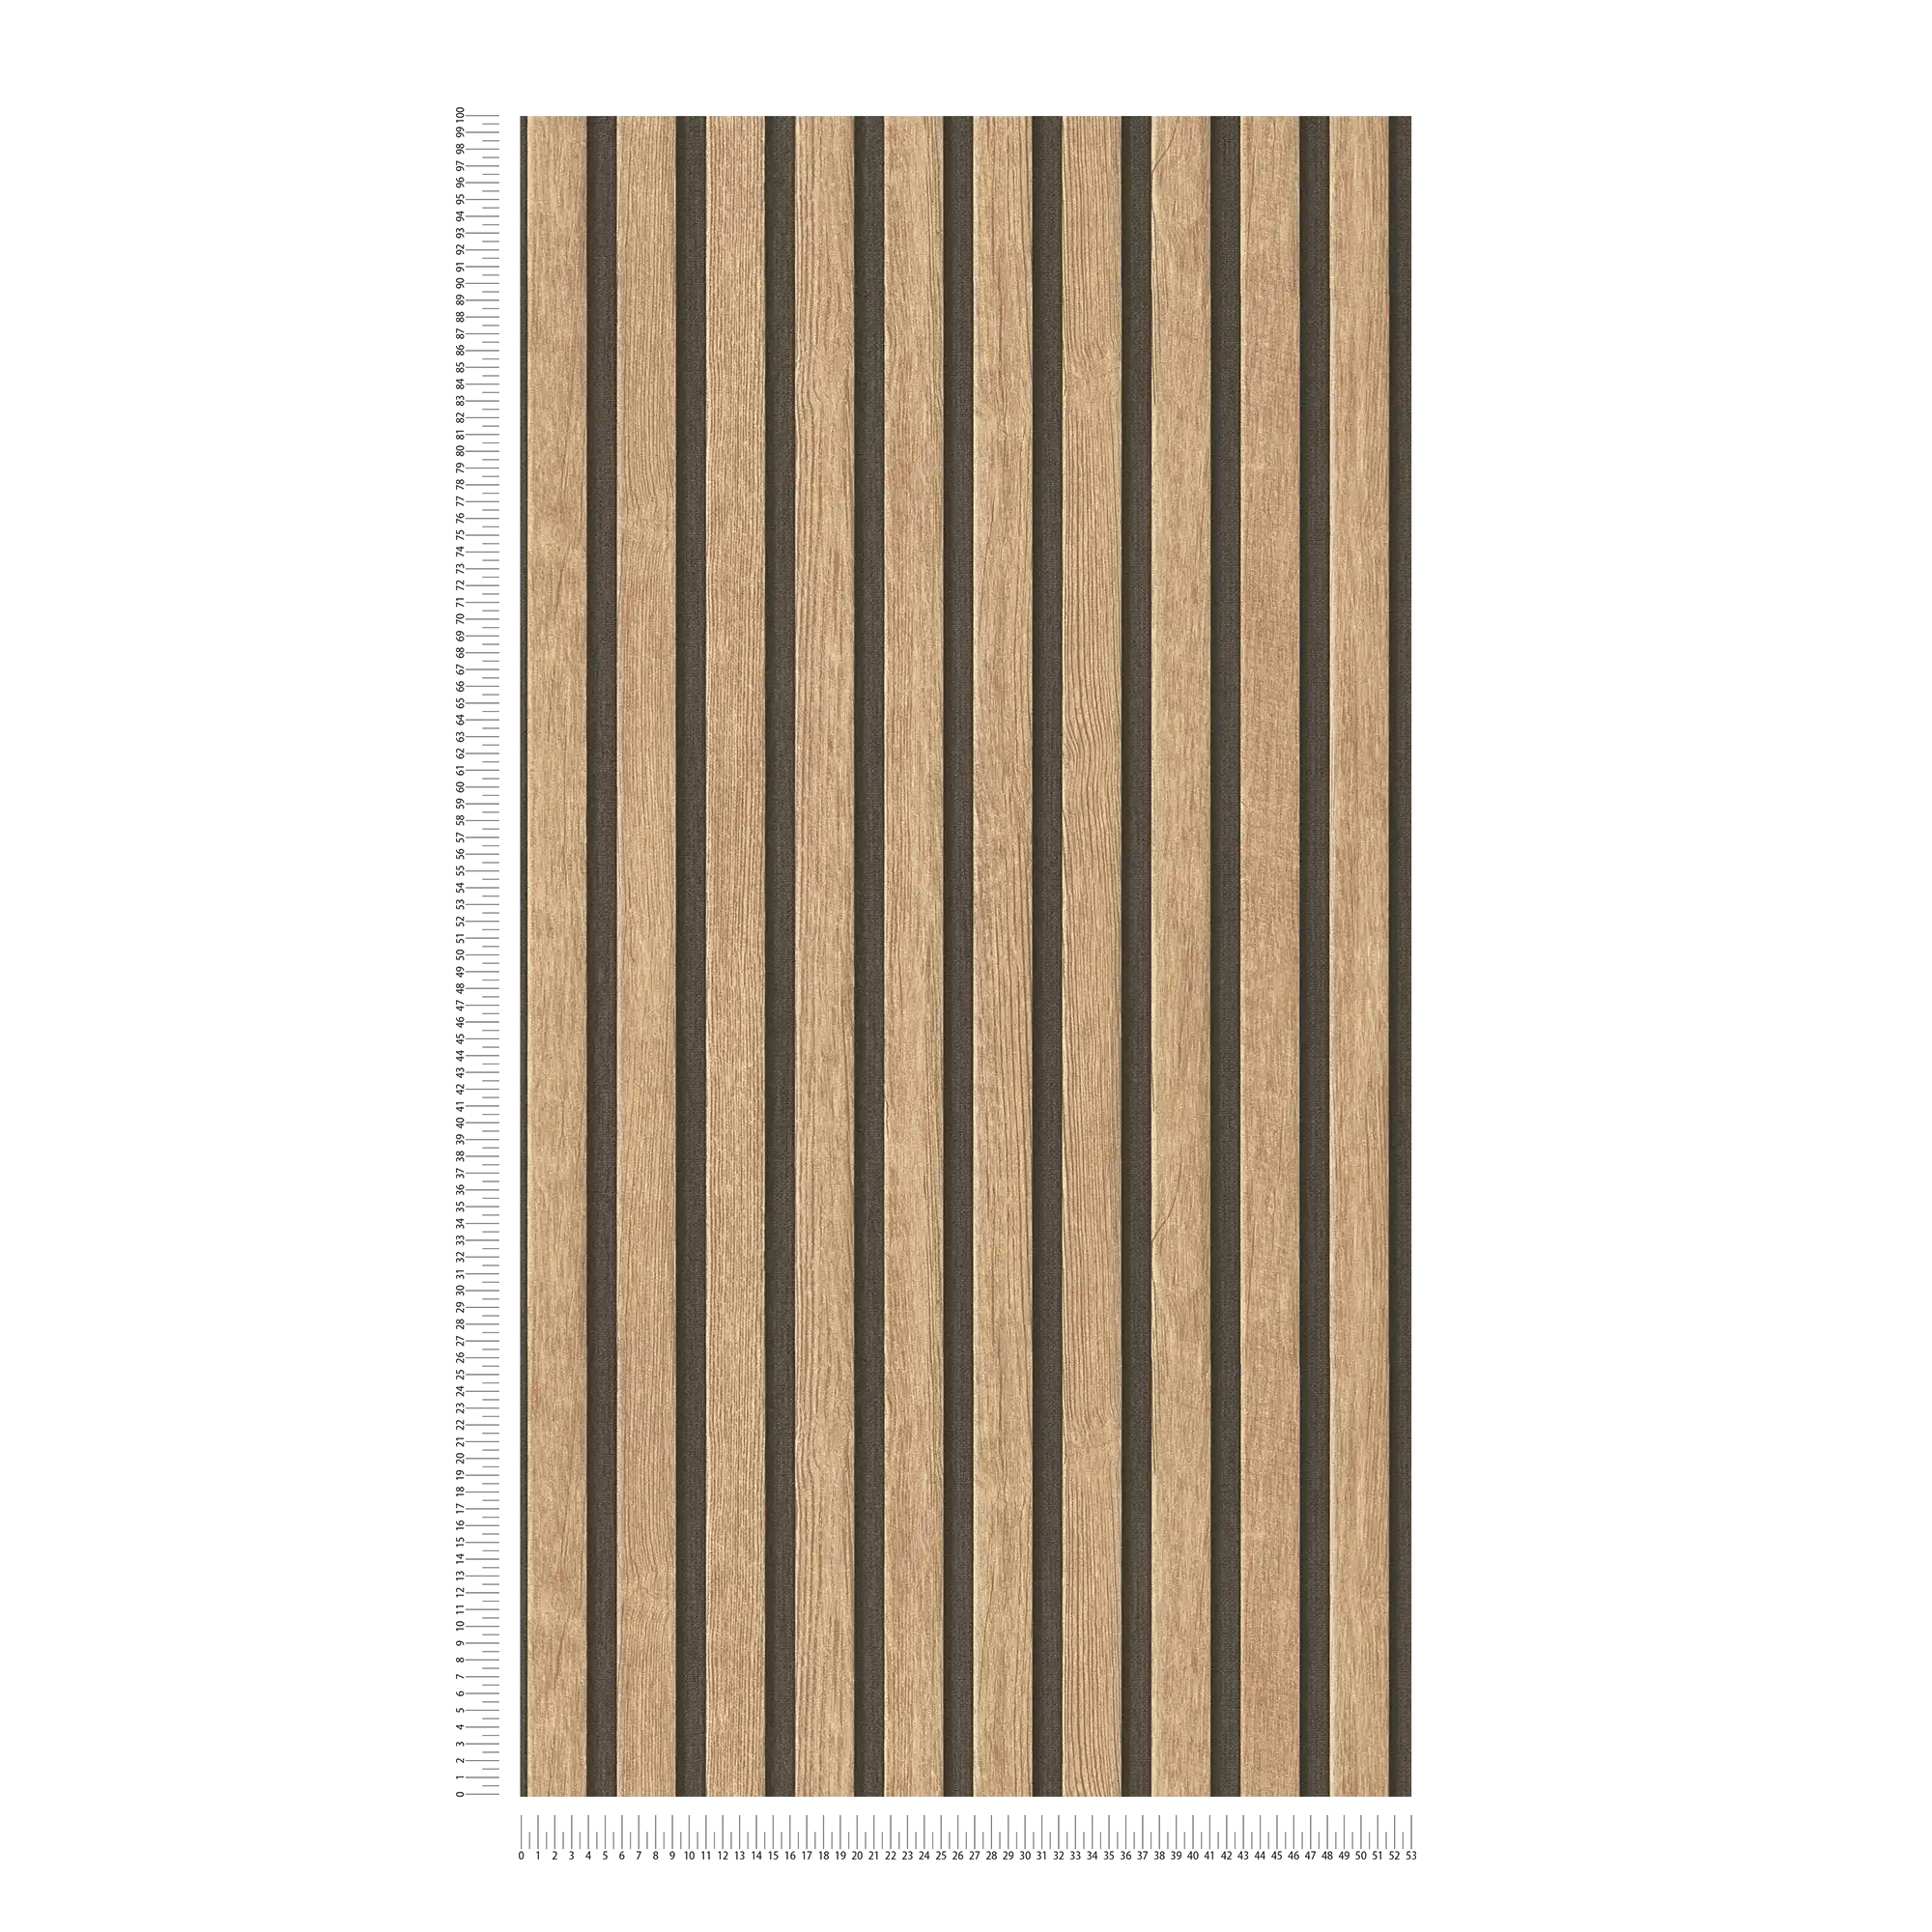             Wallpaper wood look with panel pattern - beige, brown
        